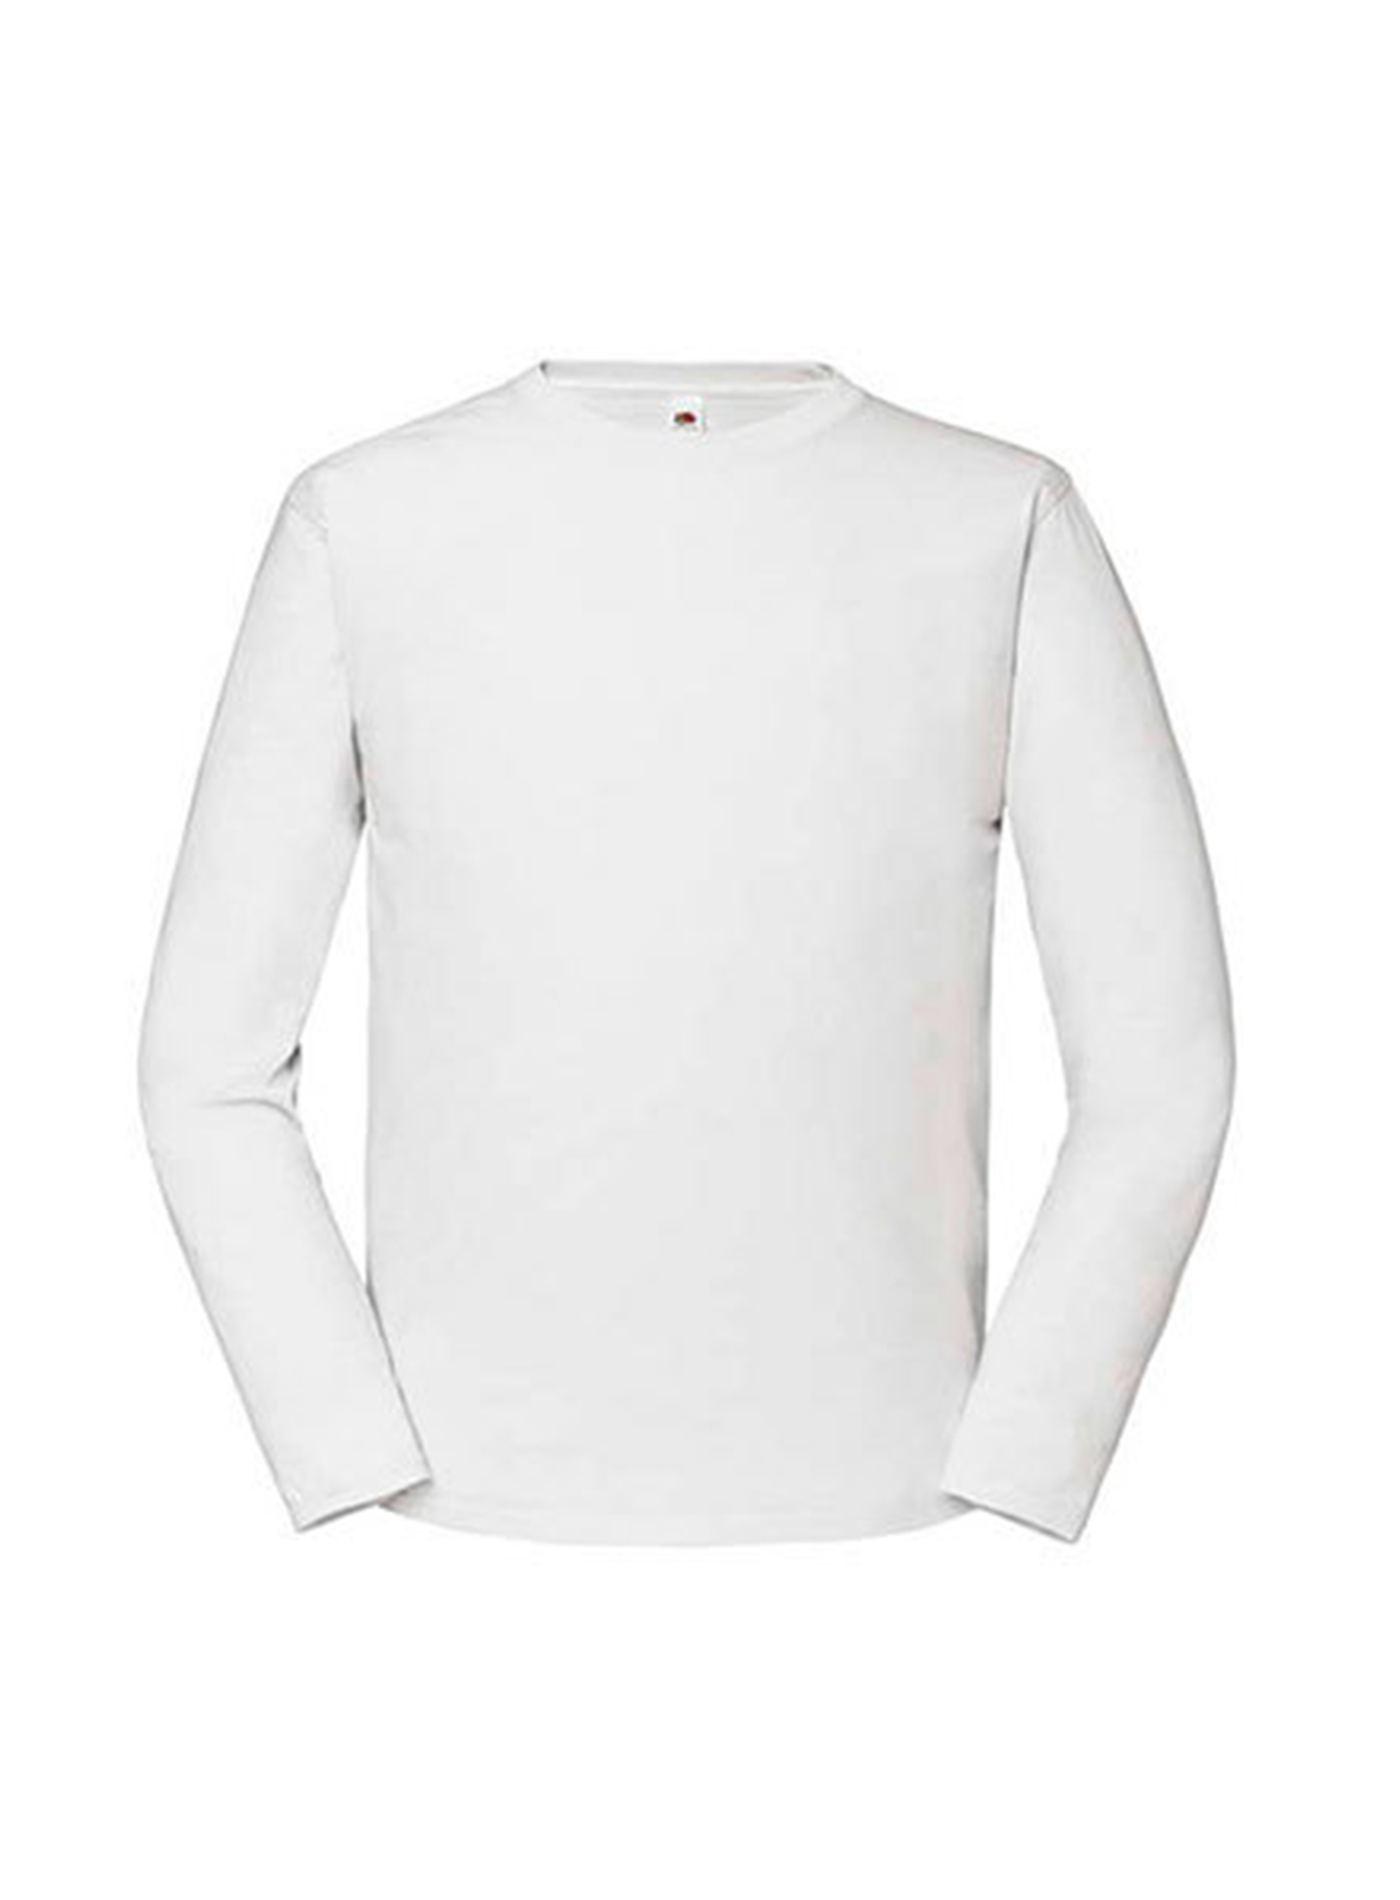 Pánské tričko s dlouhým rukávem Fruit of the Loom Iconic Premium - Bílá XL